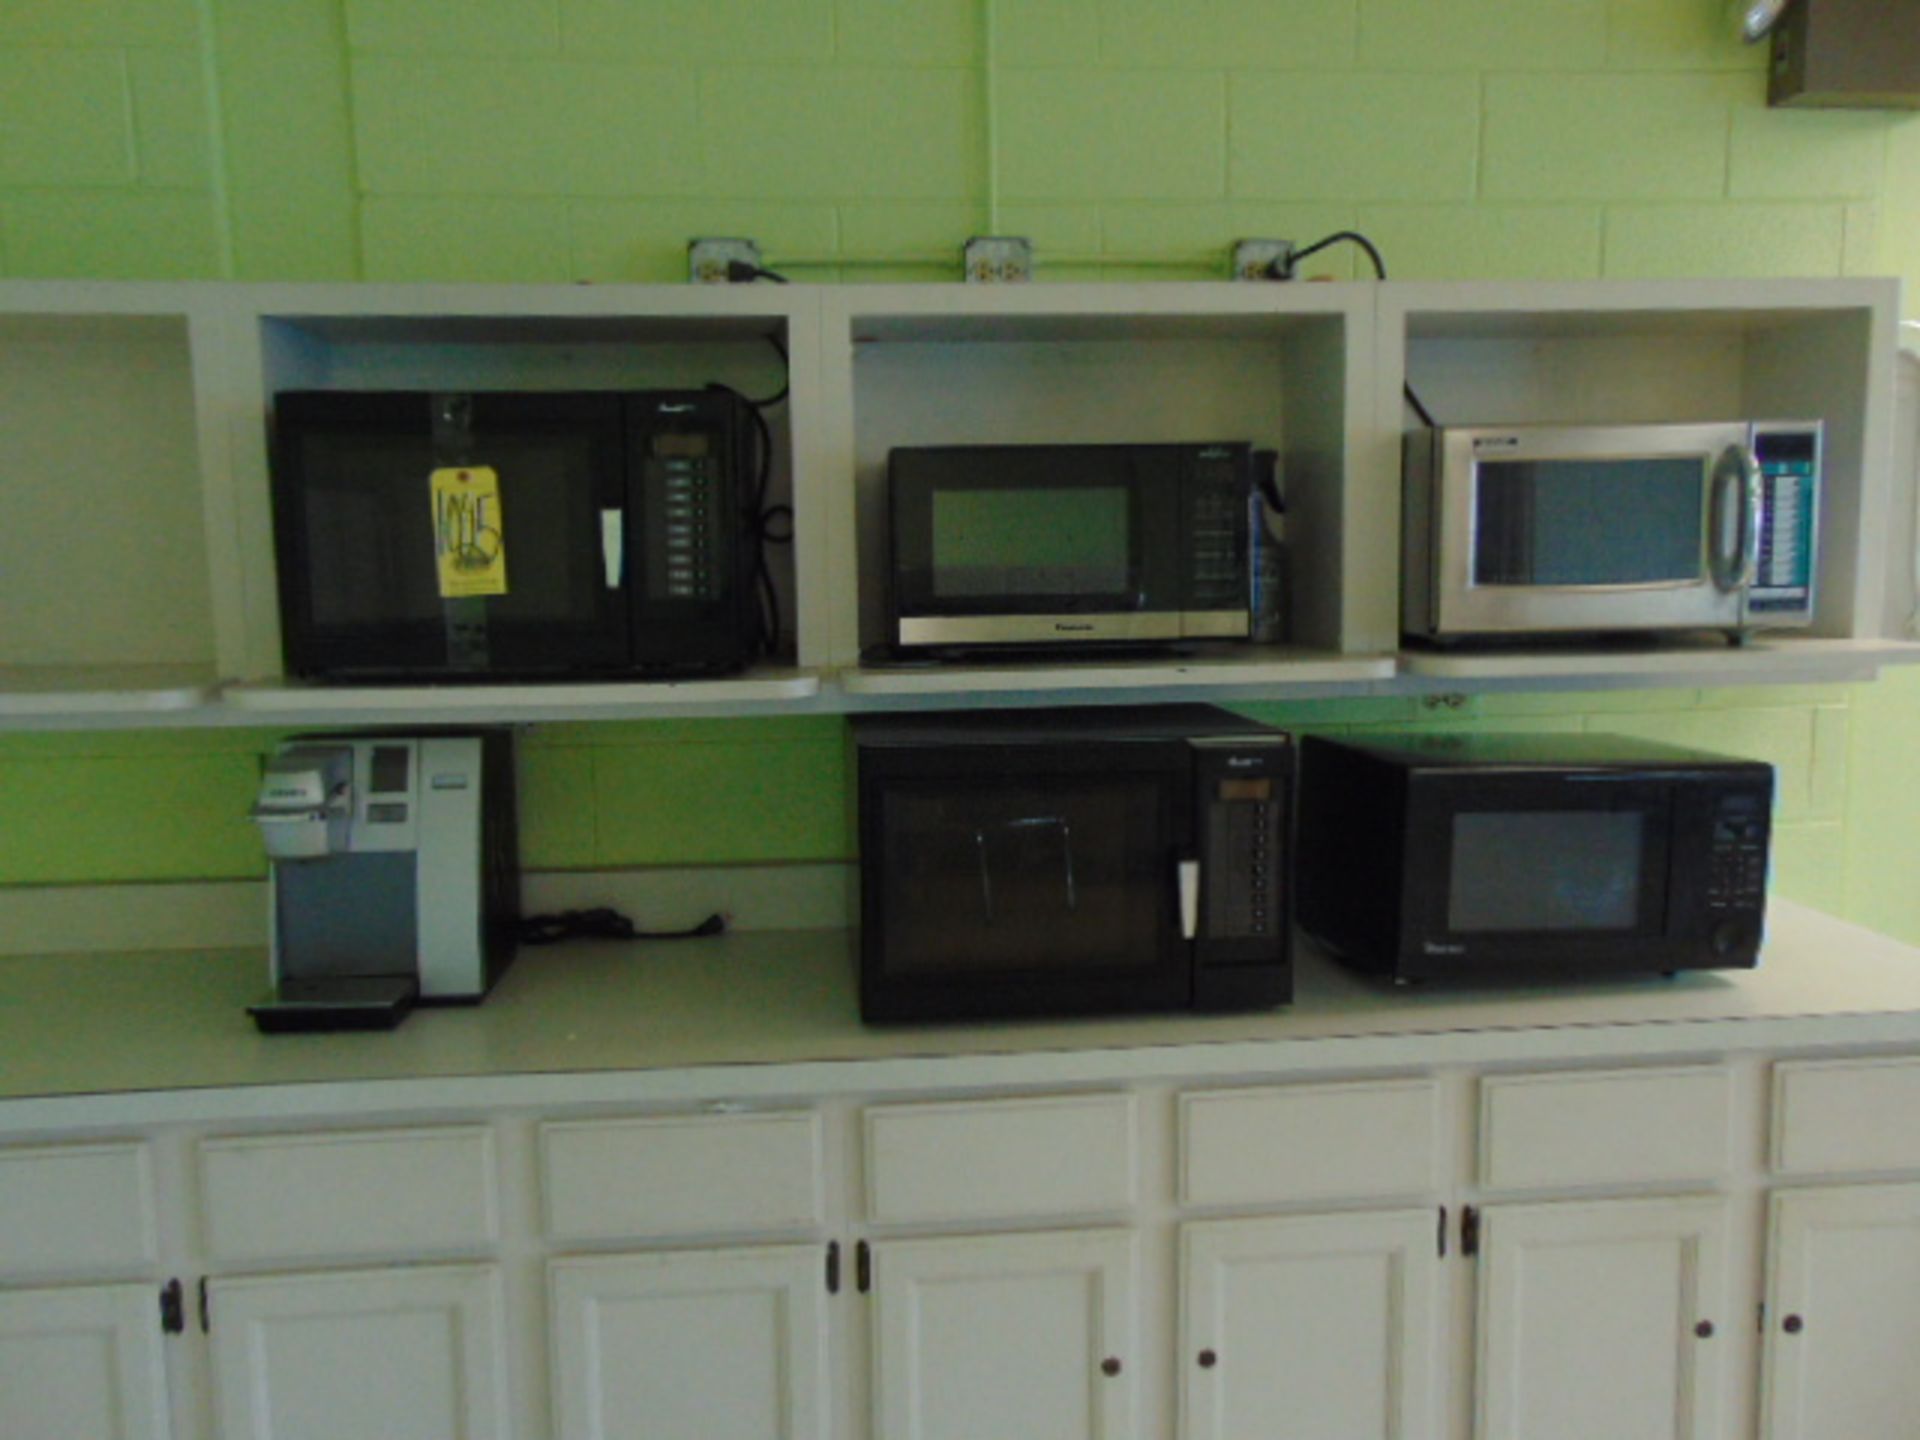 LOT CONSISTING OF: (5) microwave ovens & Keurig coffee maker